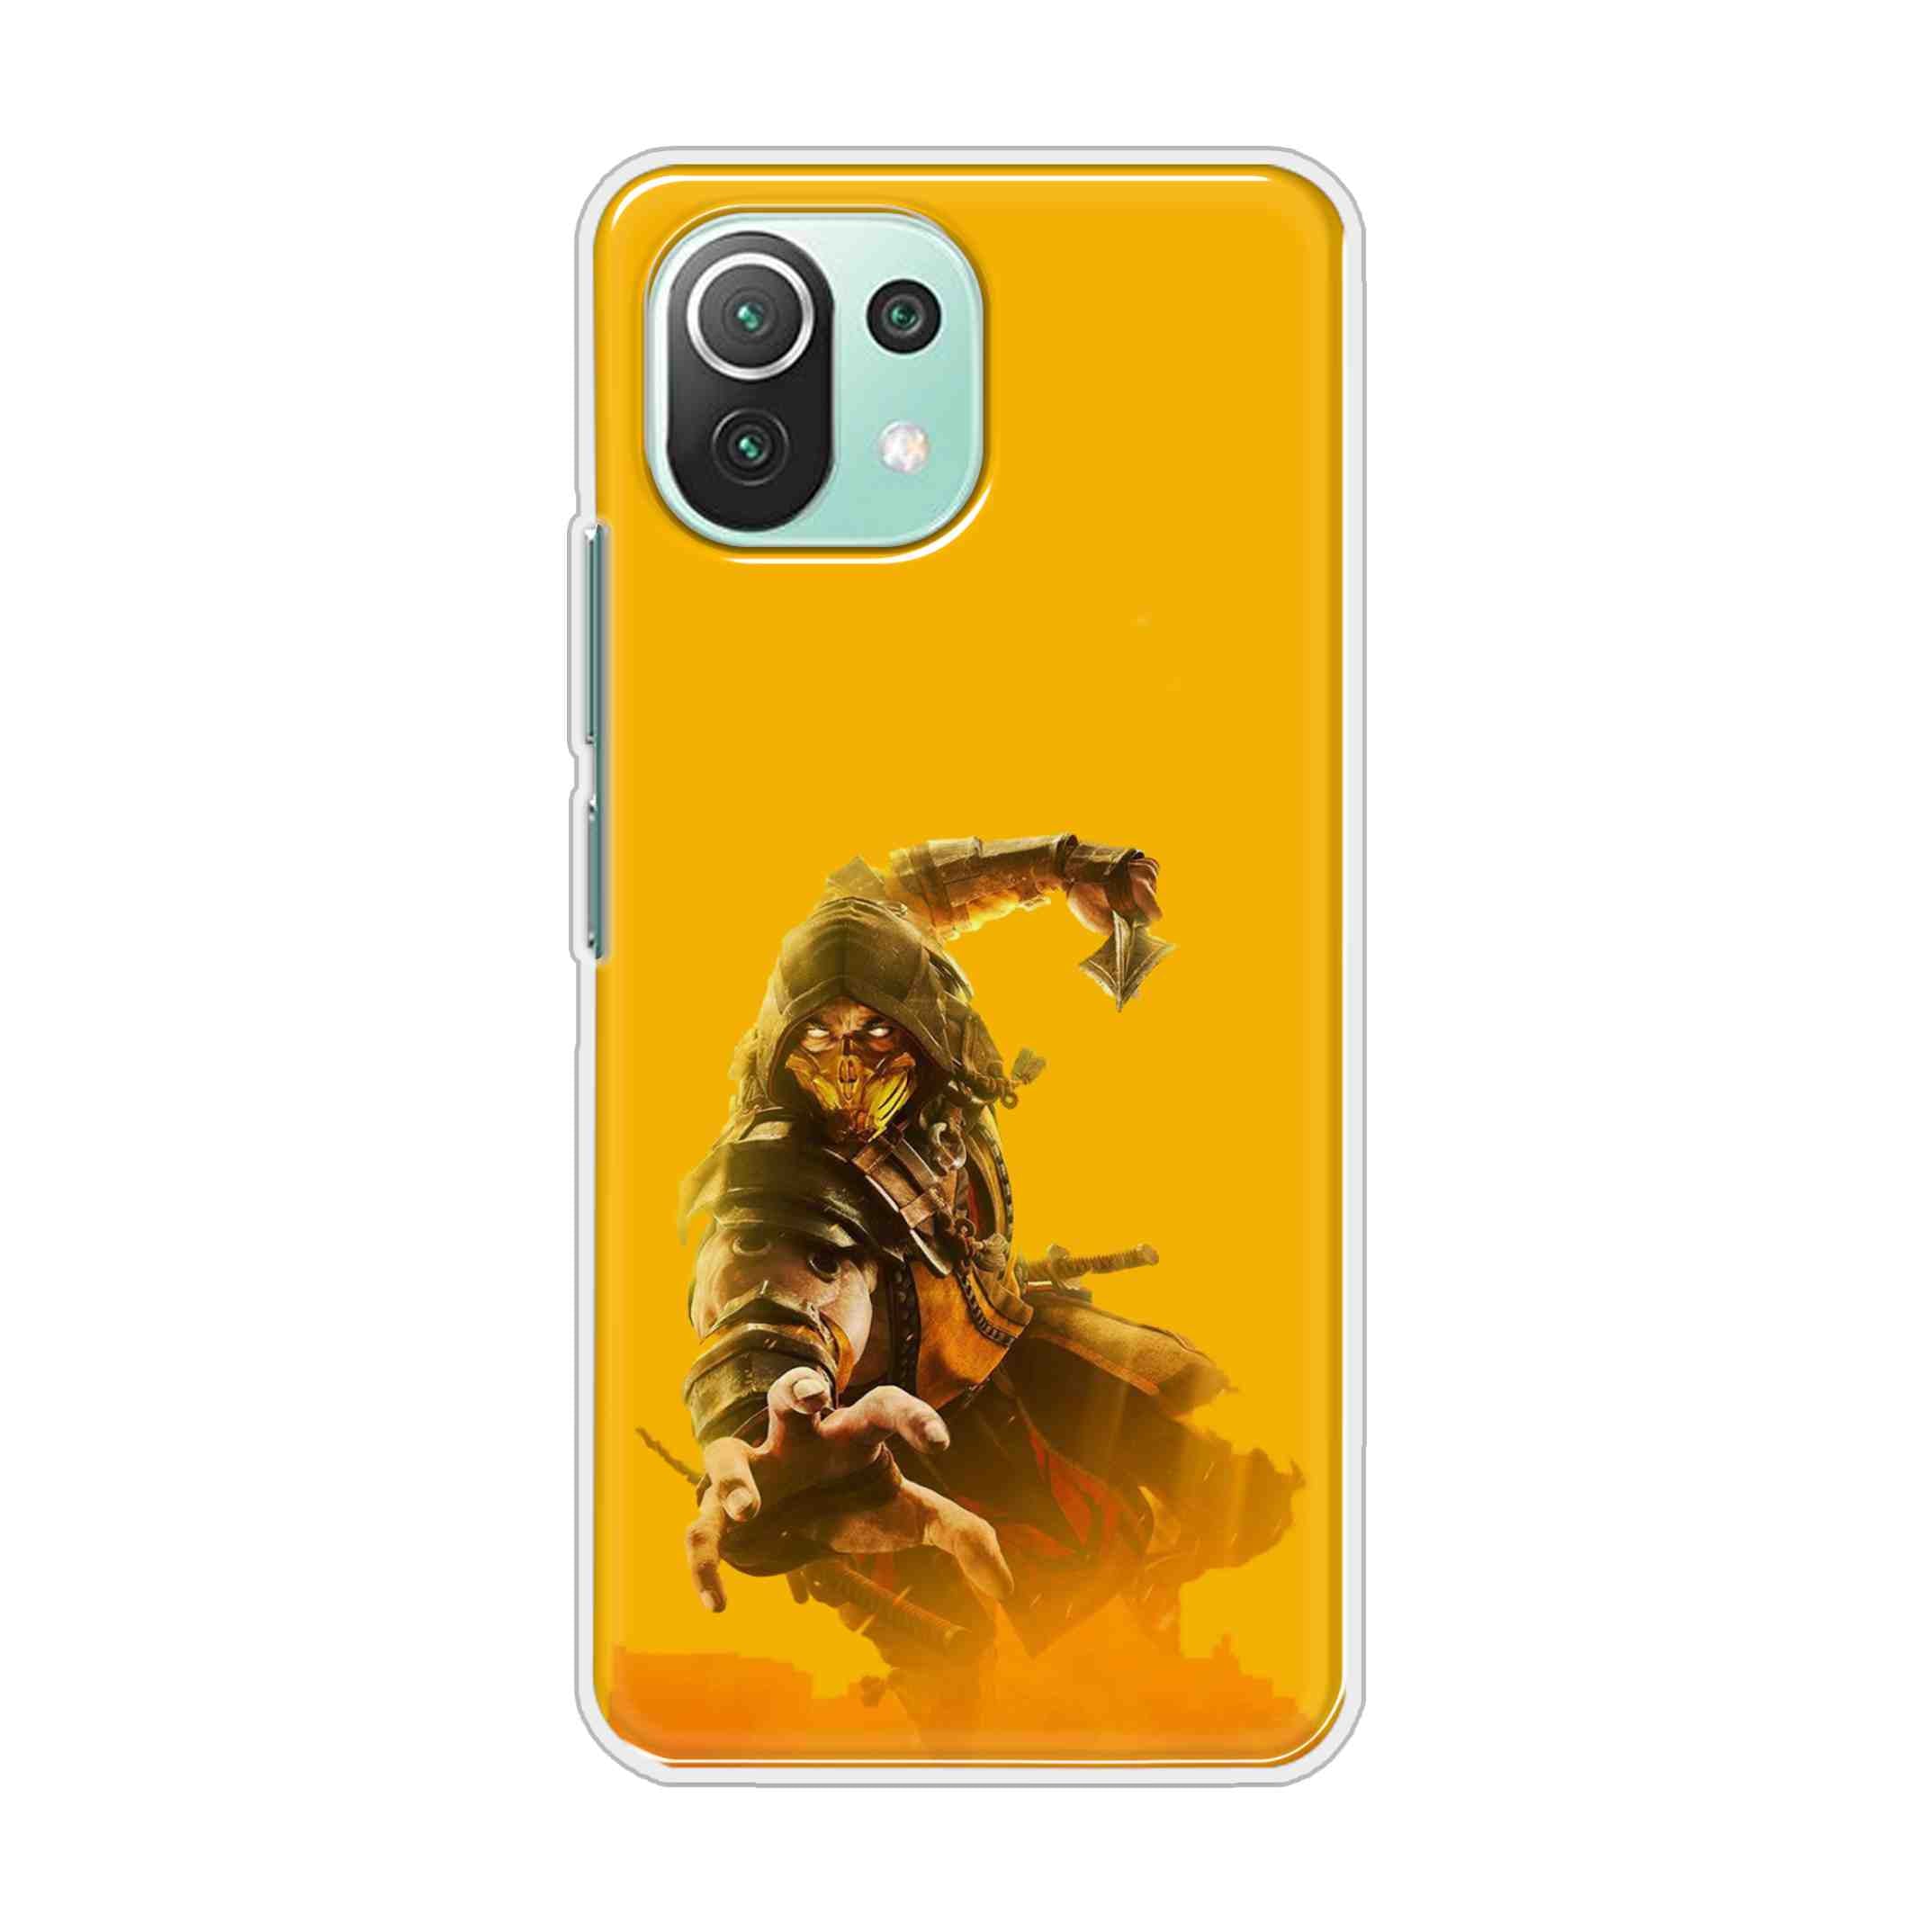 Buy Mortal Kombat Hard Back Mobile Phone Case Cover For Mi 11 Lite 5G Online